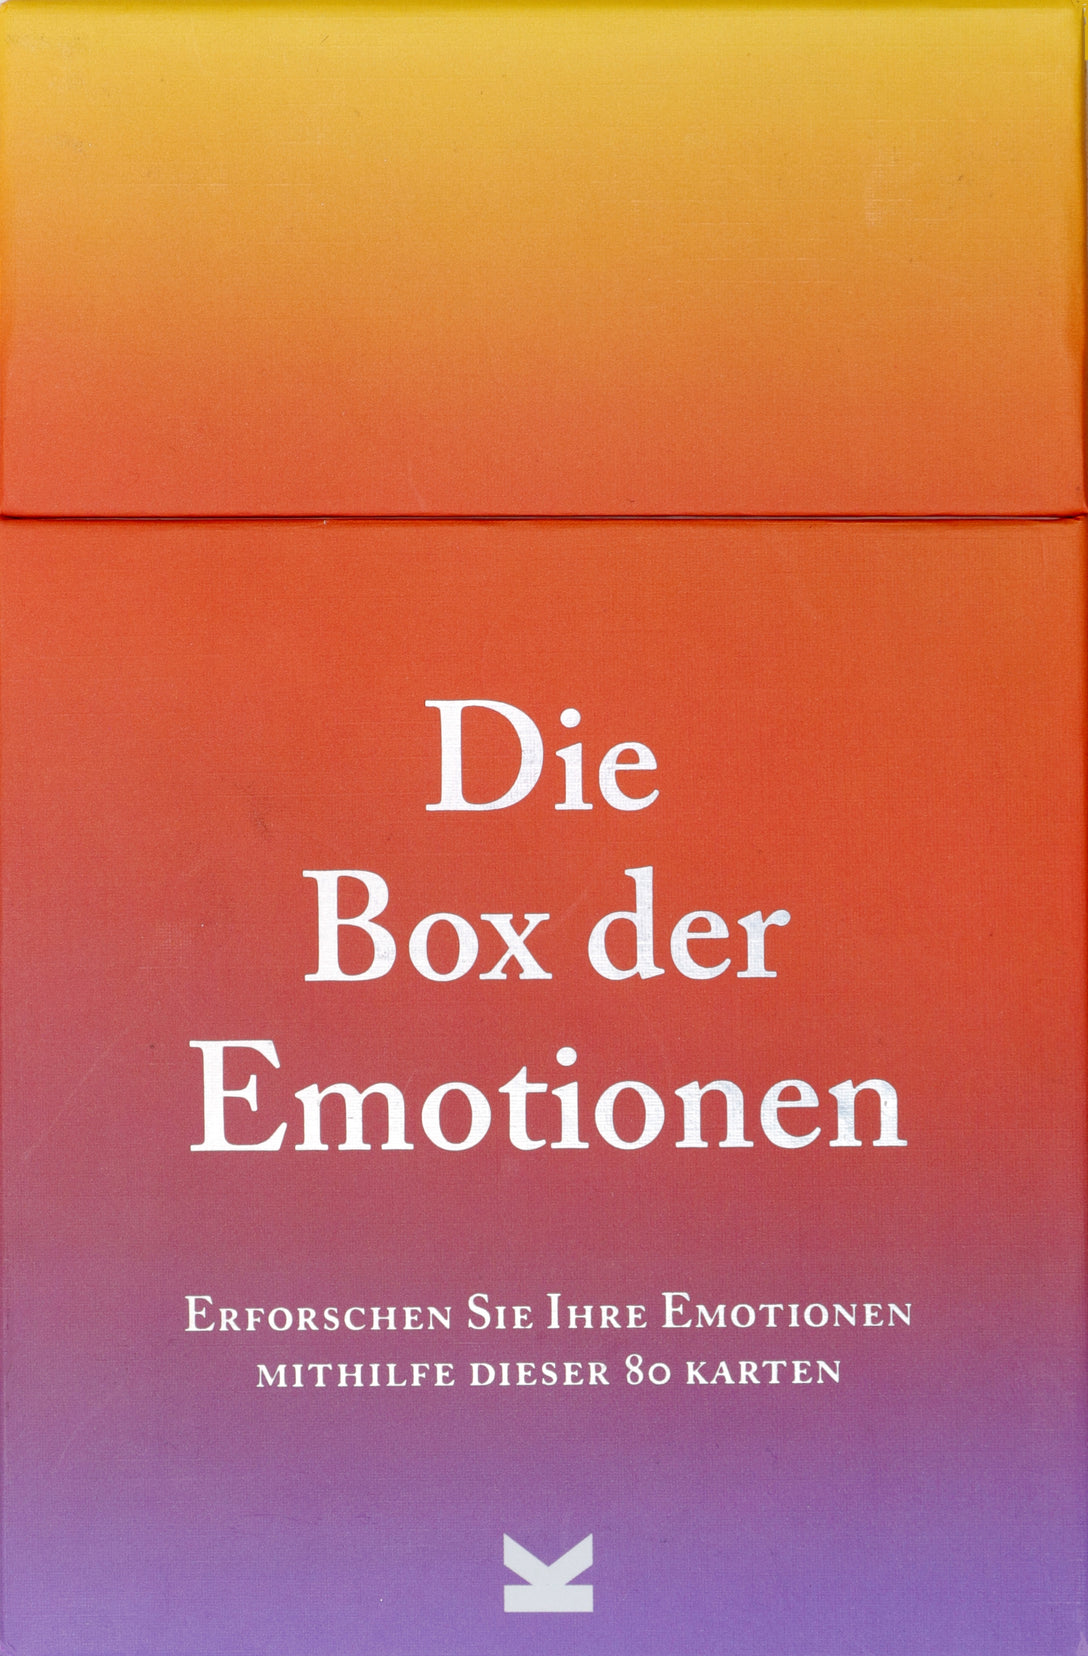 Die Box der Emotionen by Therese Vandling, Frederik Kugler, Tiffany Watt Smith